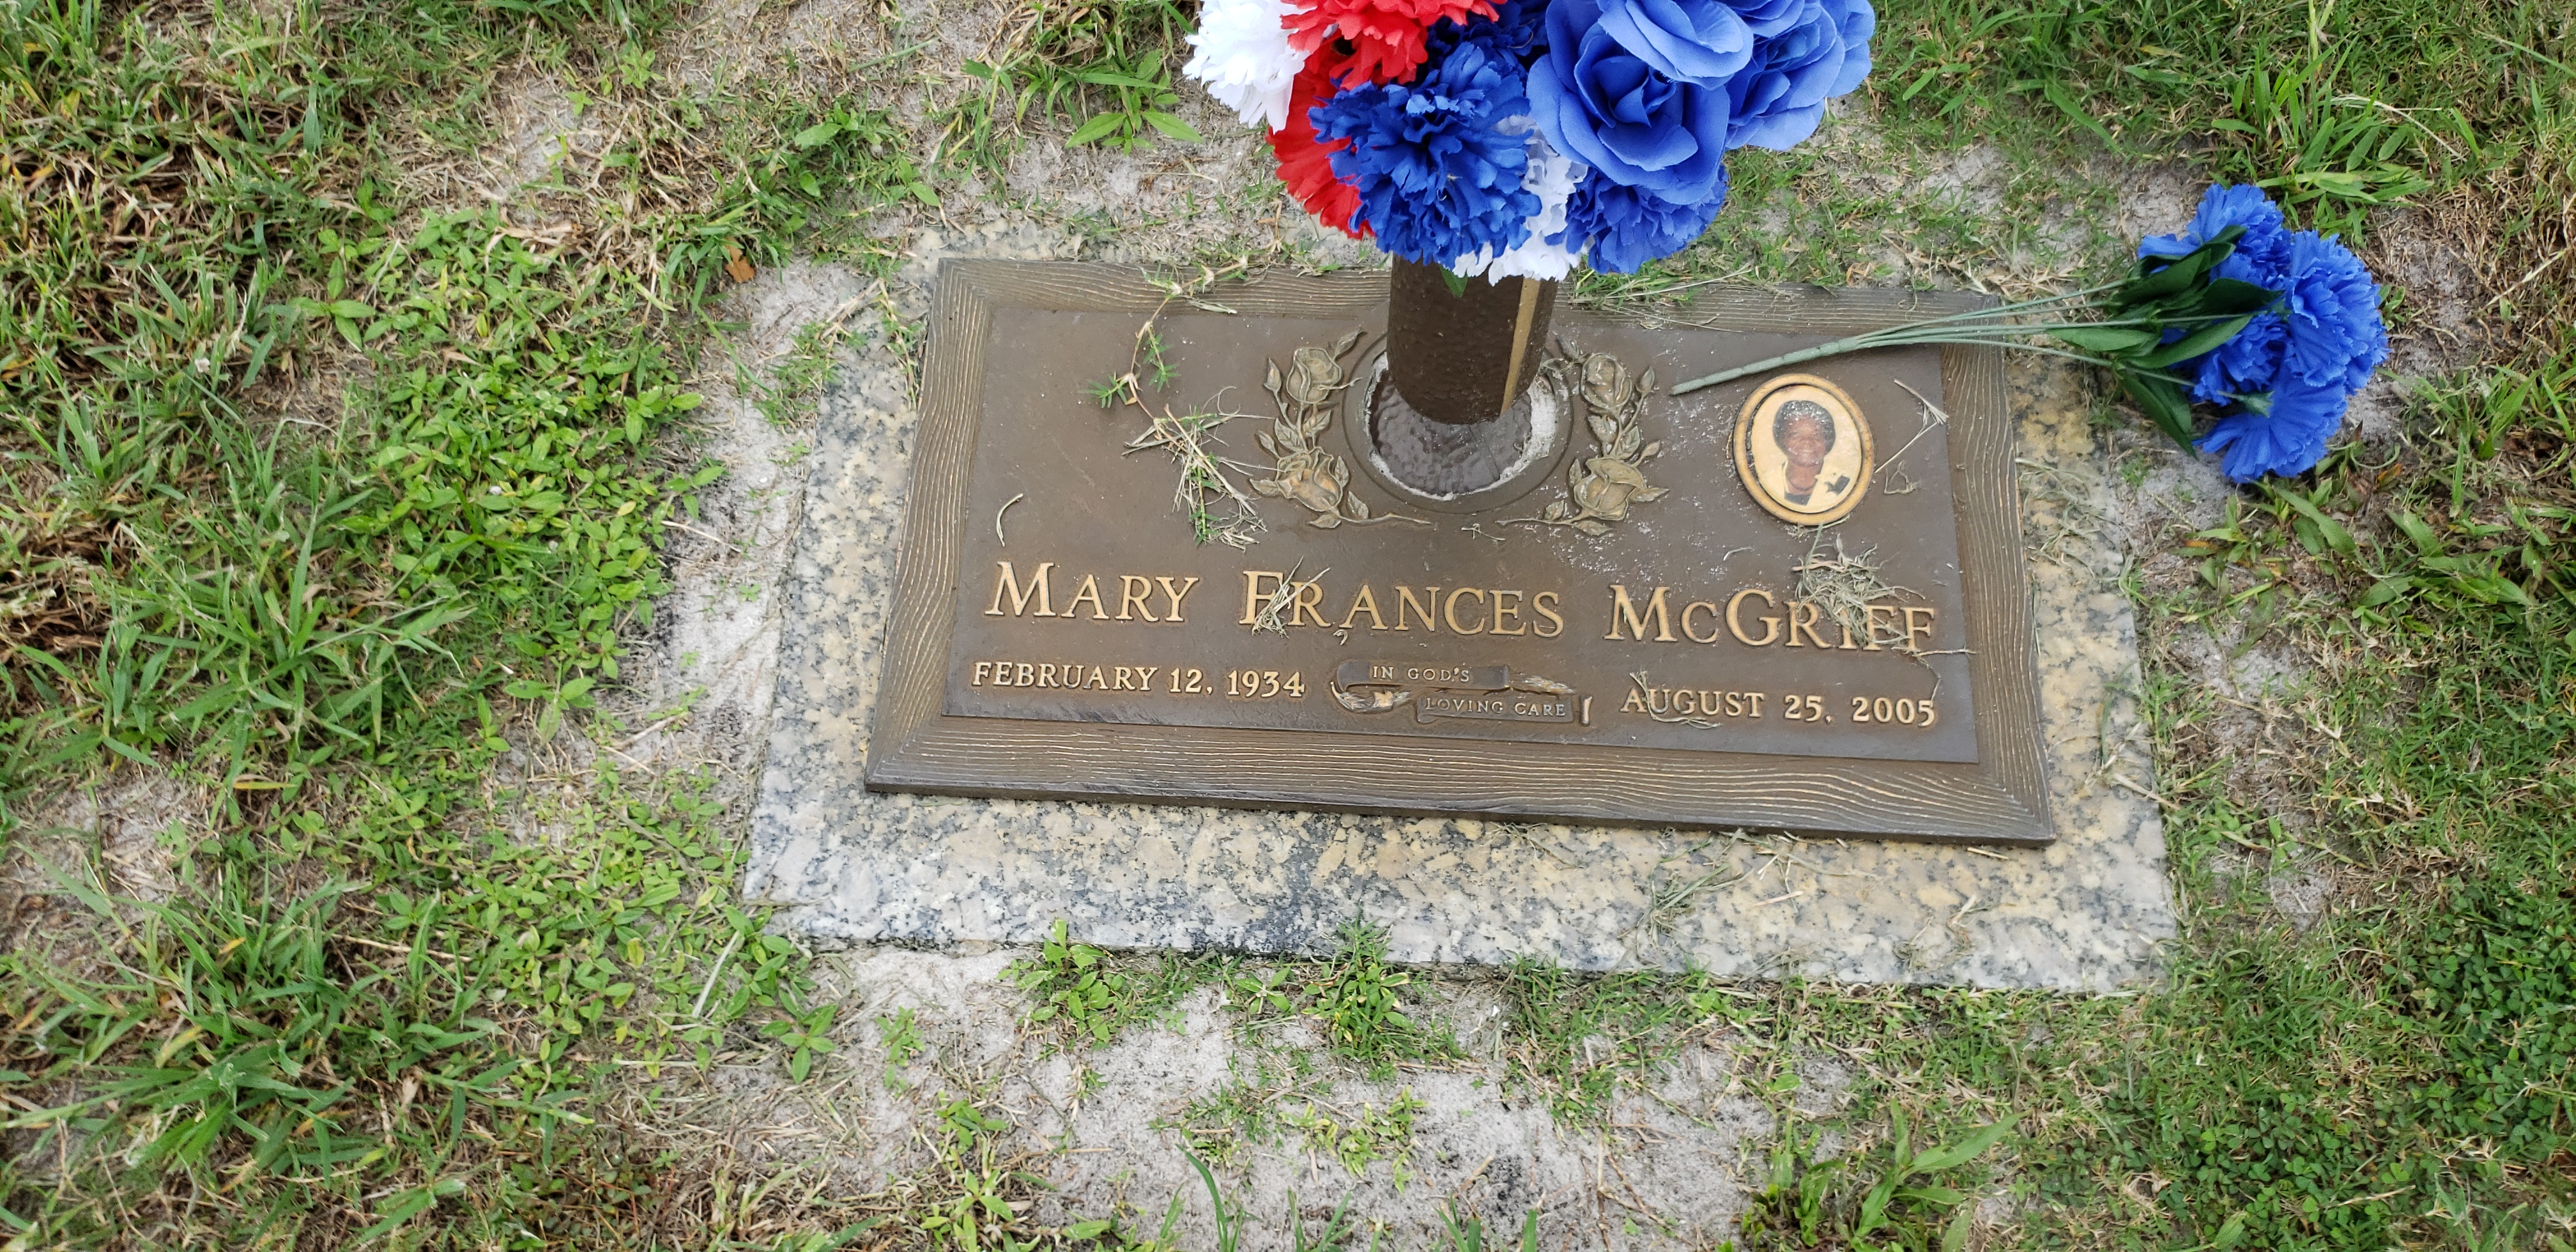 Mary Frances McGriff